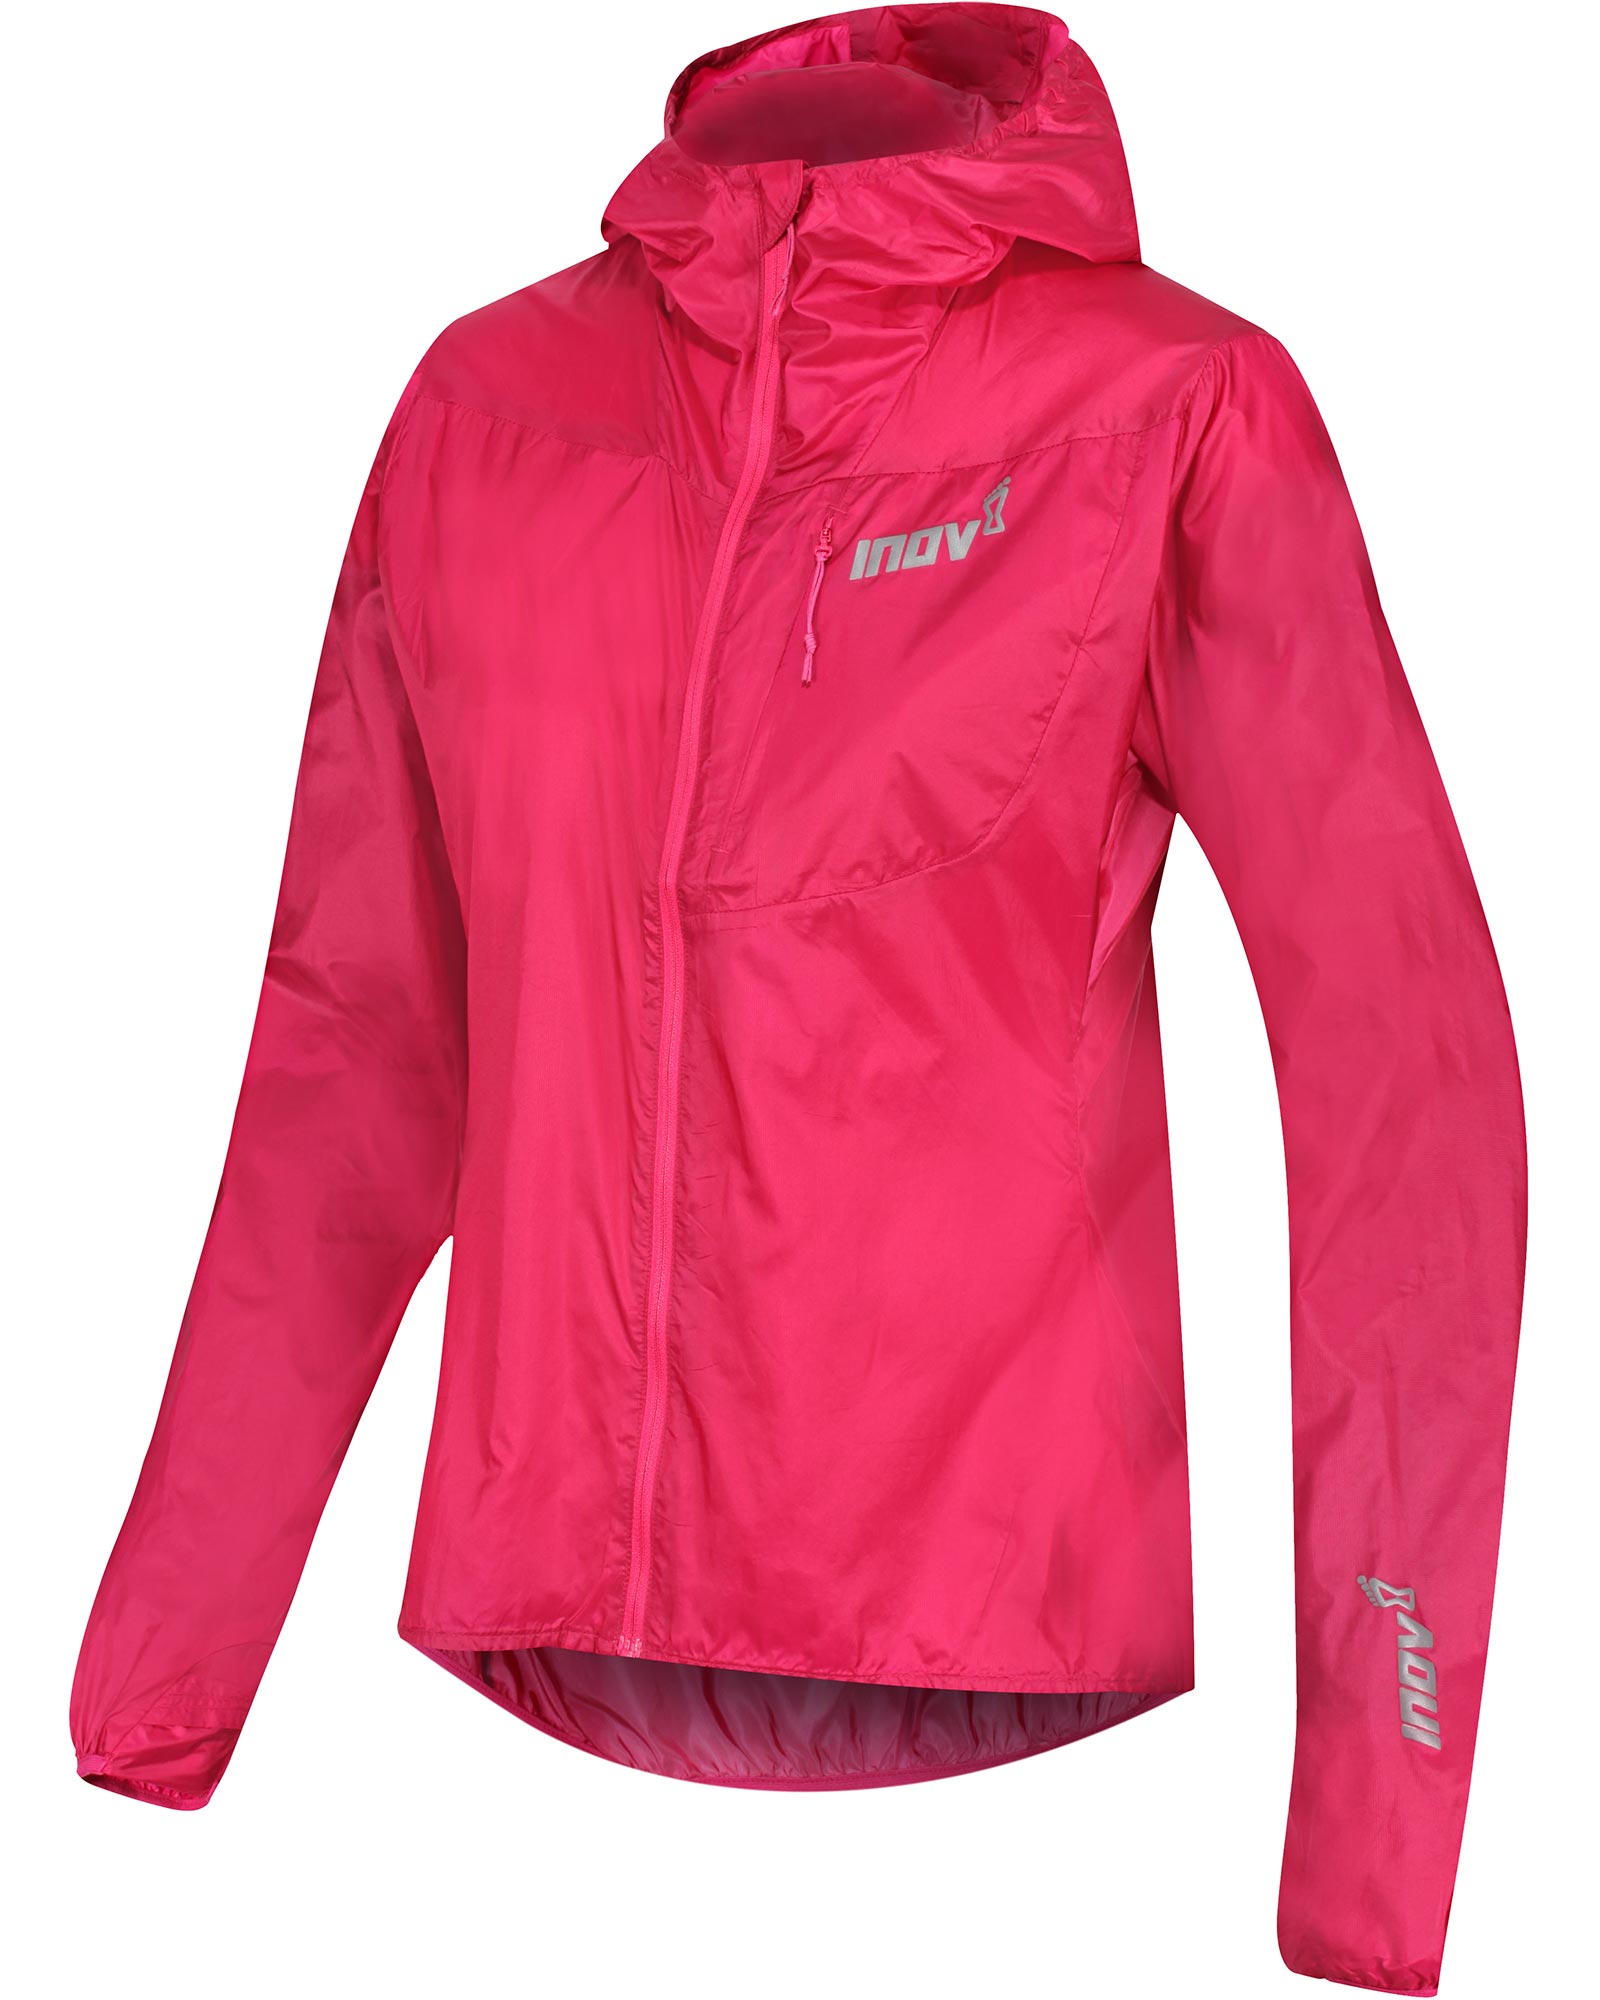 Inov 8 Full Zip Windshell Women’s Jacket - Pink 10